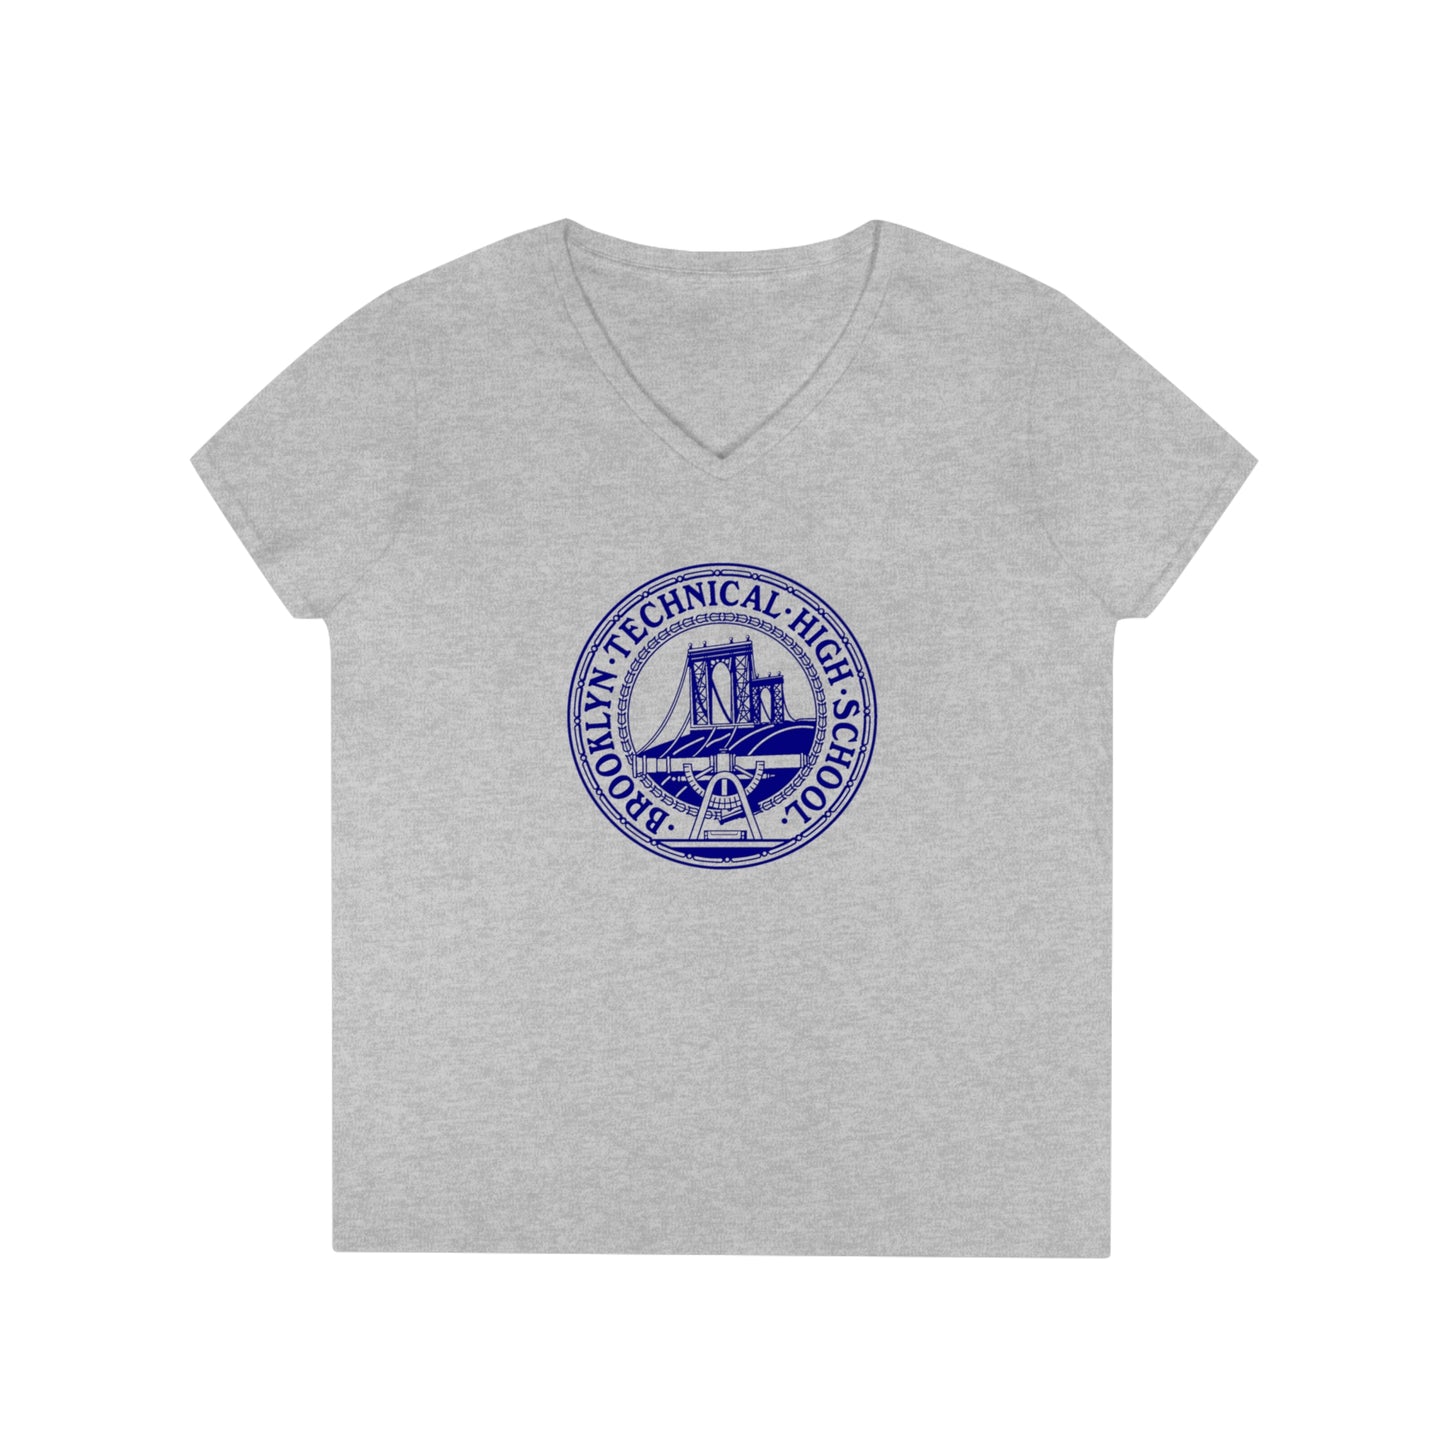 Classic Tech Seal - Ladies V-Neck T-Shirt